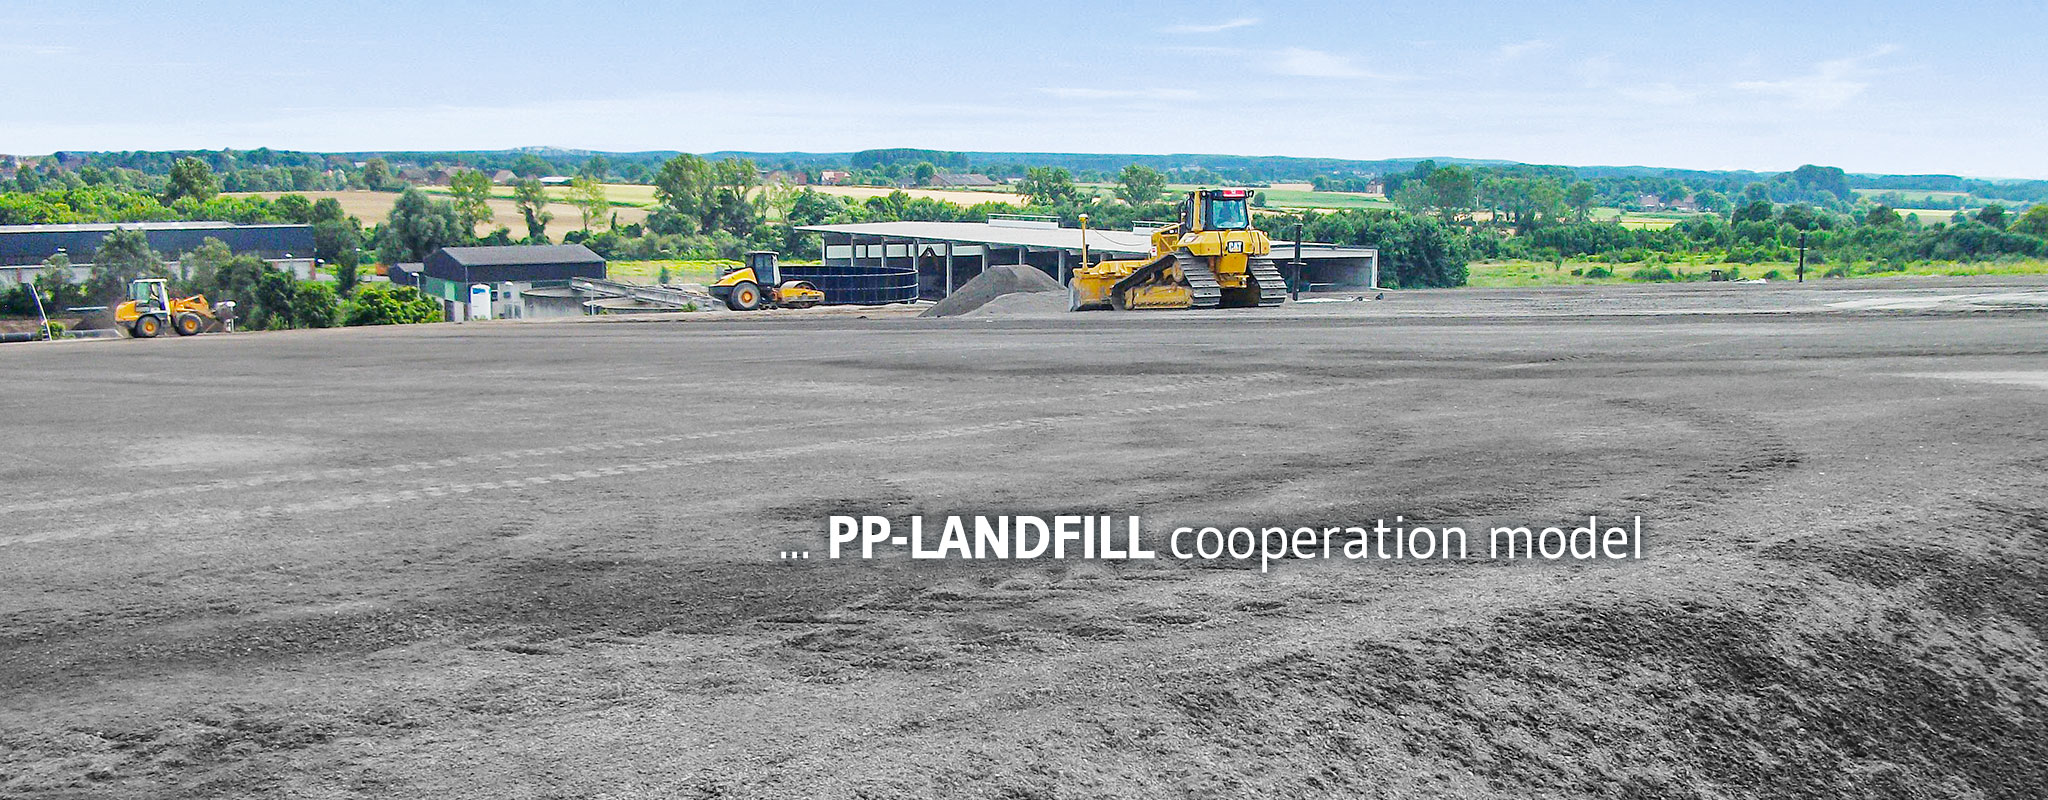 public private partnership model for landfill sites rx_sol_home-slide_G_ppdeponie_EN_02b.jpg